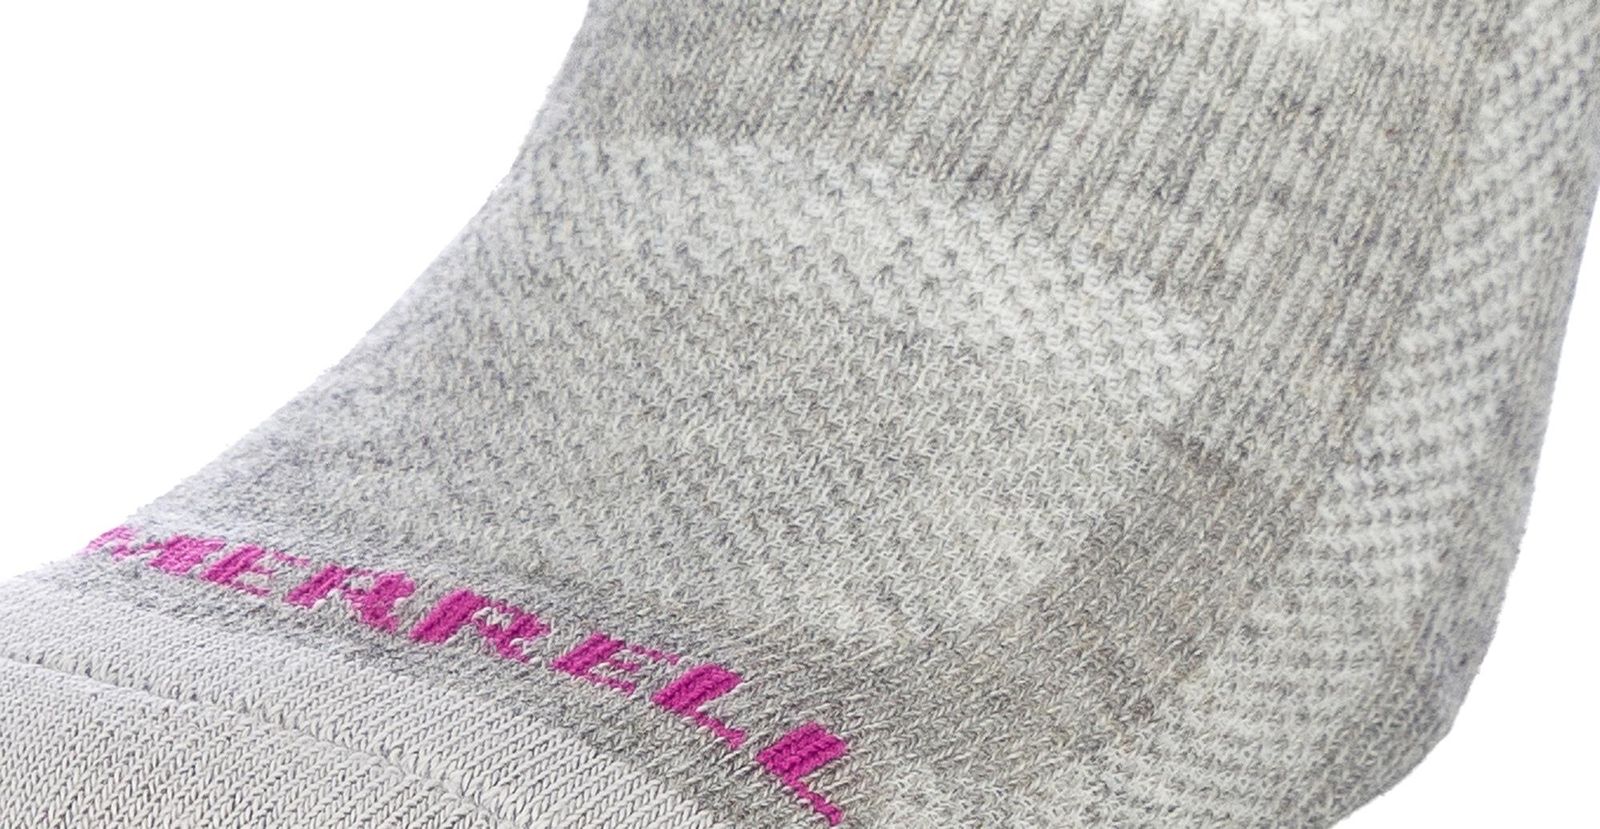  Merrell Adult Socks, : , . S19AMRSOU02-AJ.  35/38